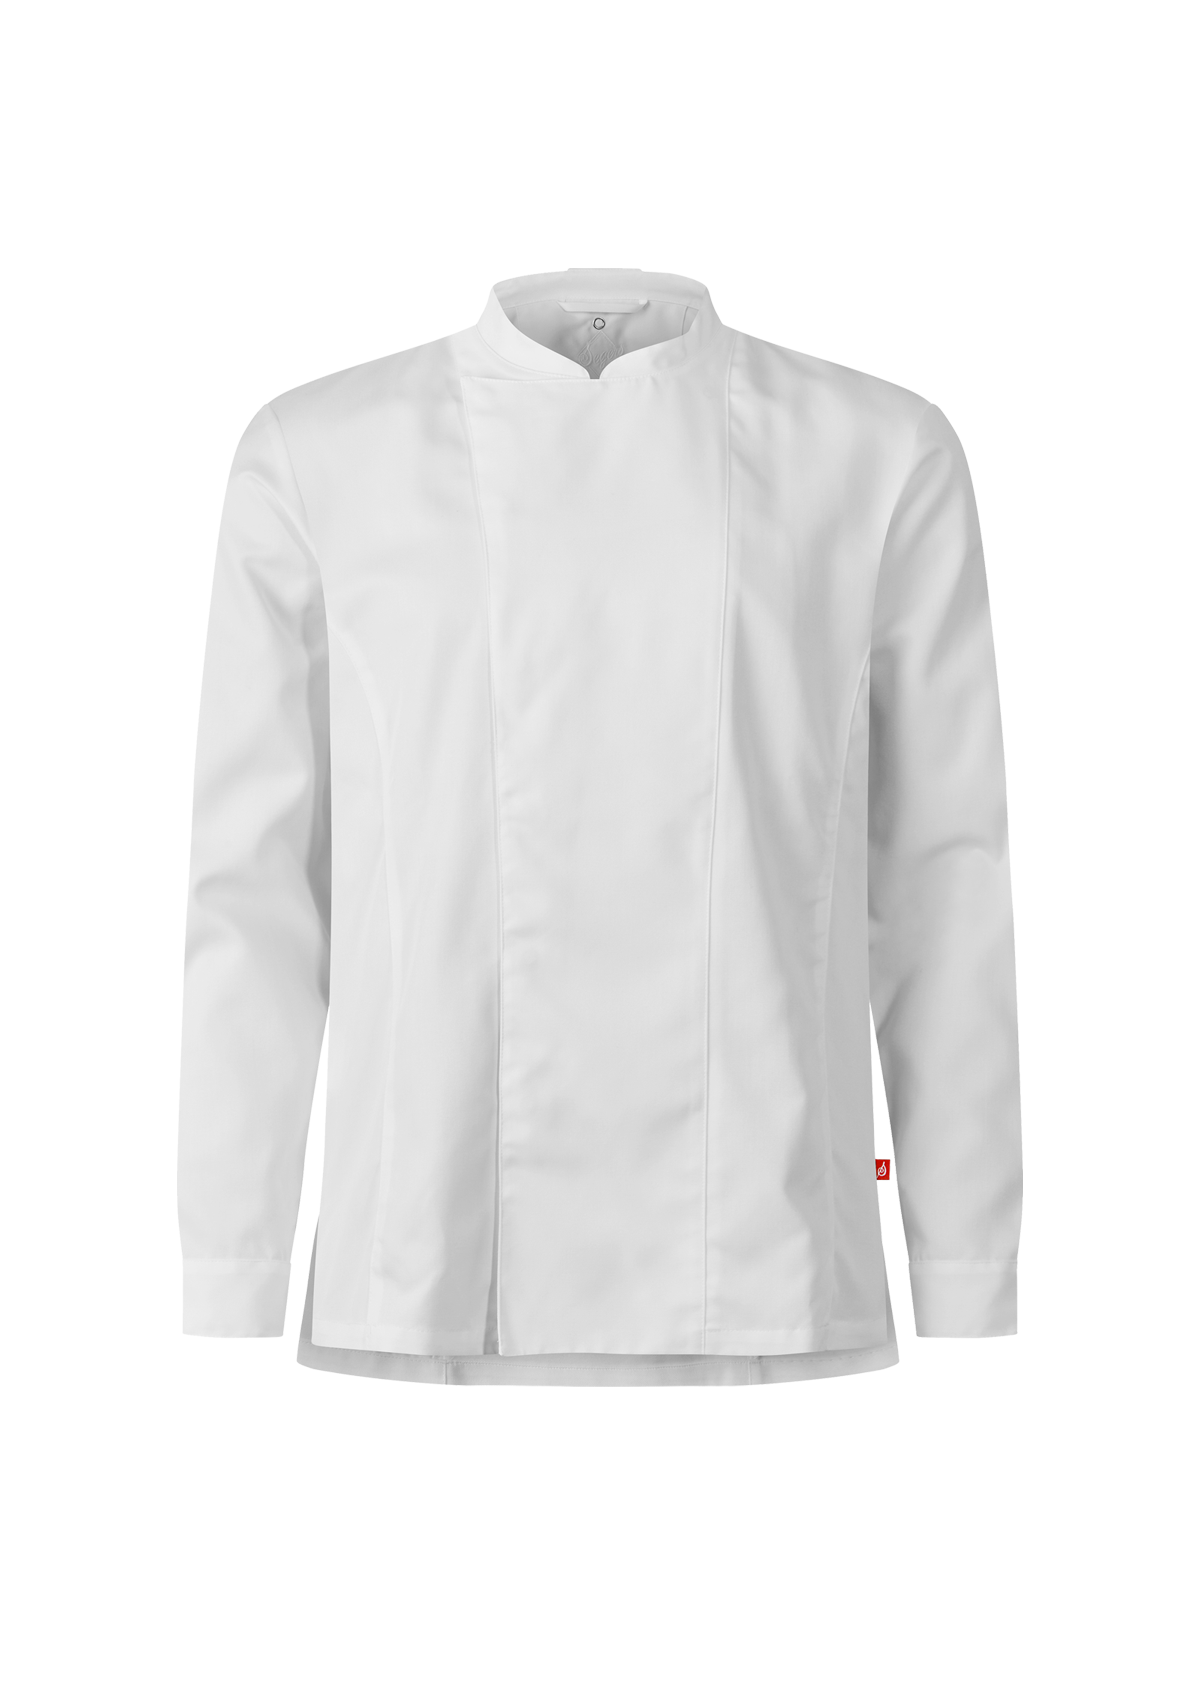 Men's stretch chef's jacket